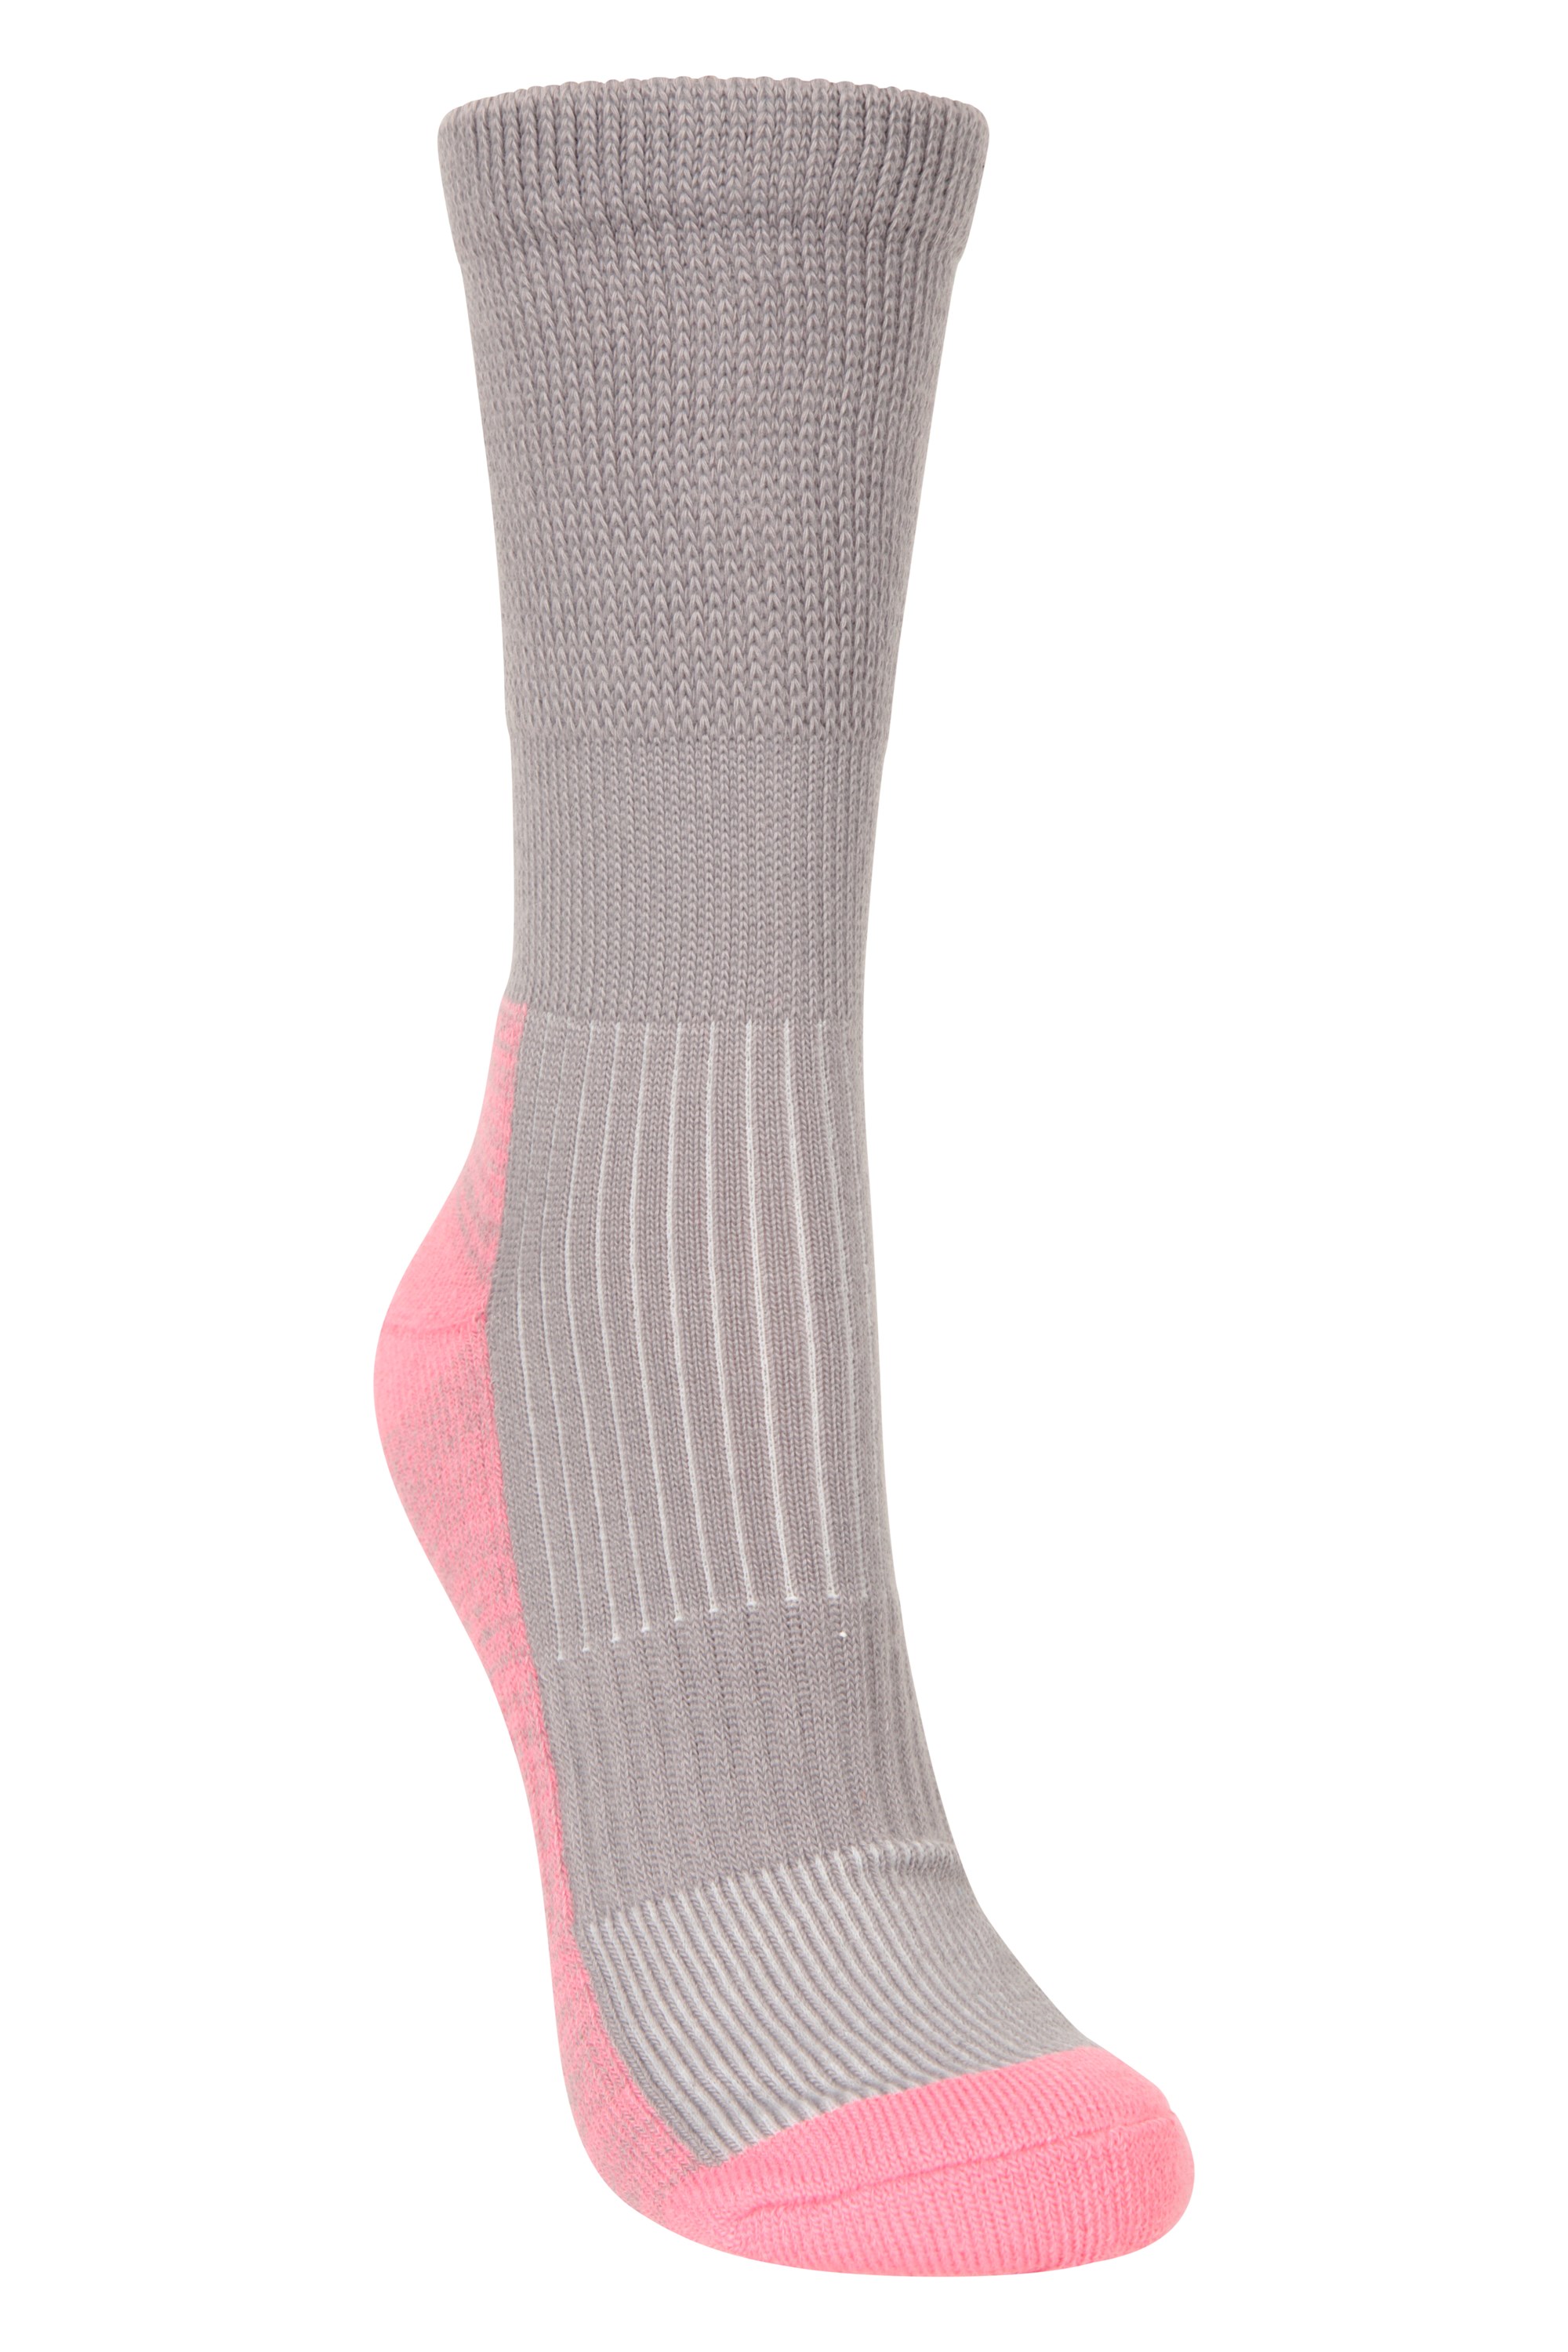 Isocool Womens Hiker Socks - Grey